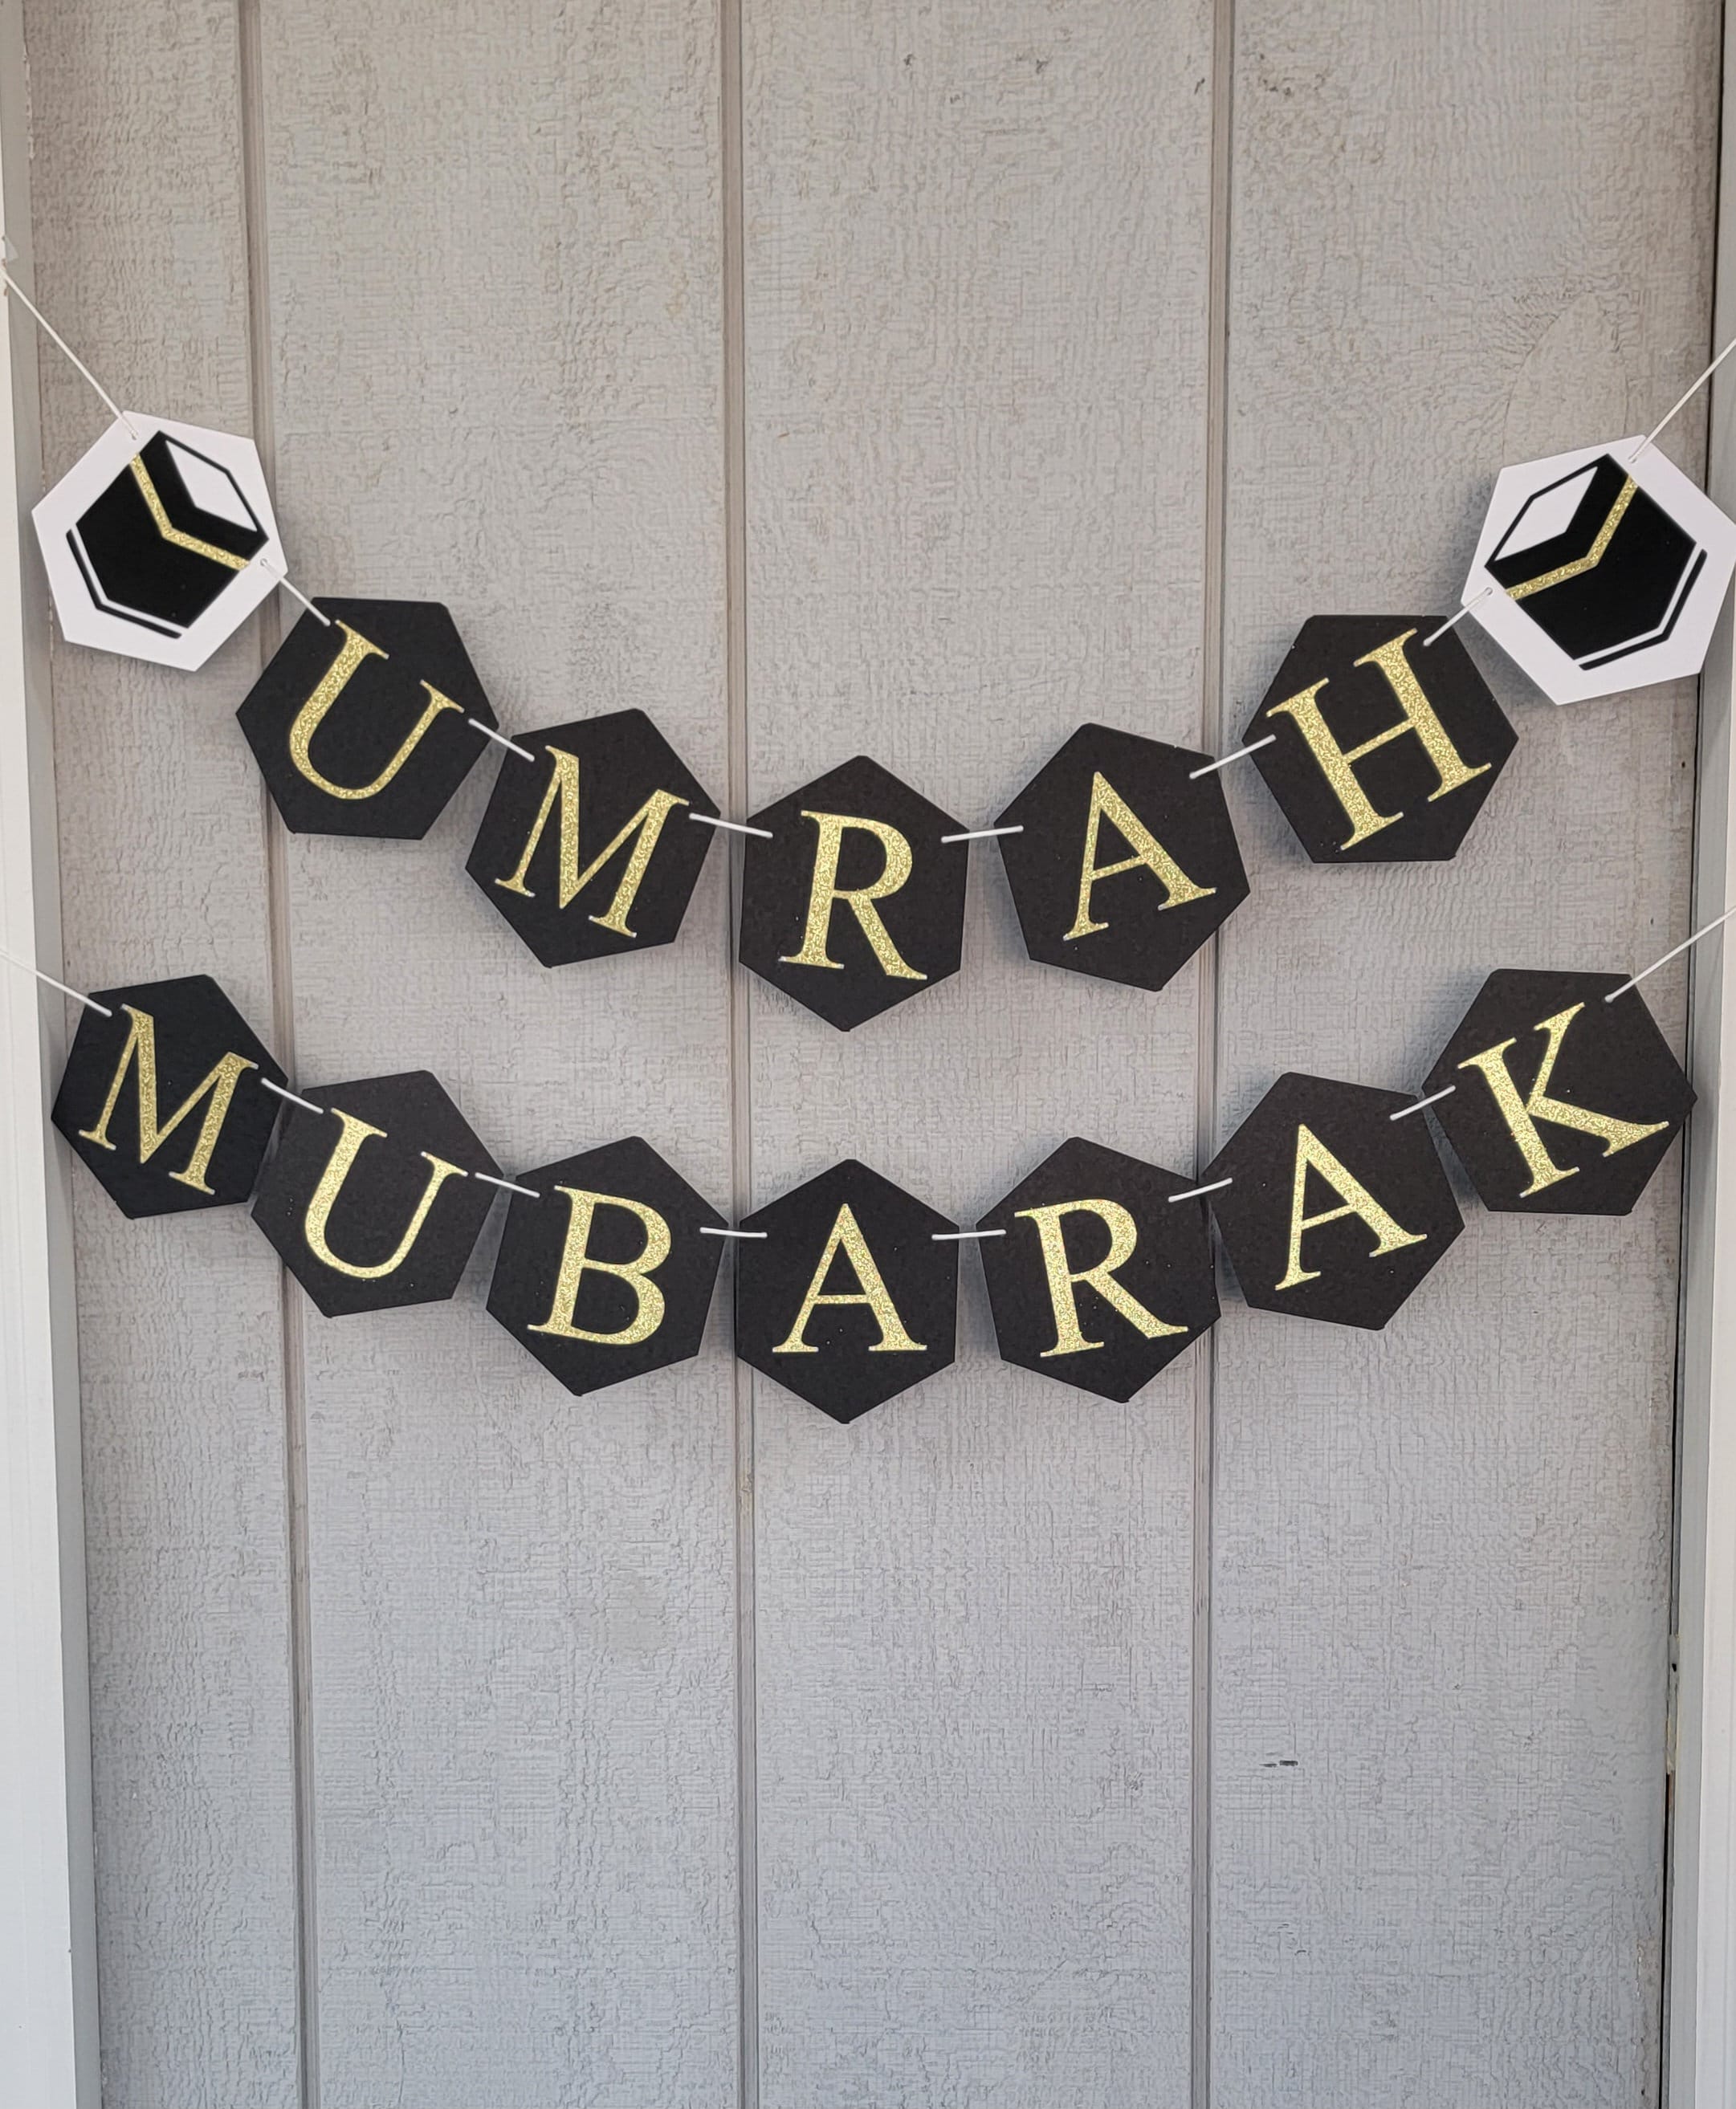 Umrah Mubarak Bunting Kit - Islamic Moments